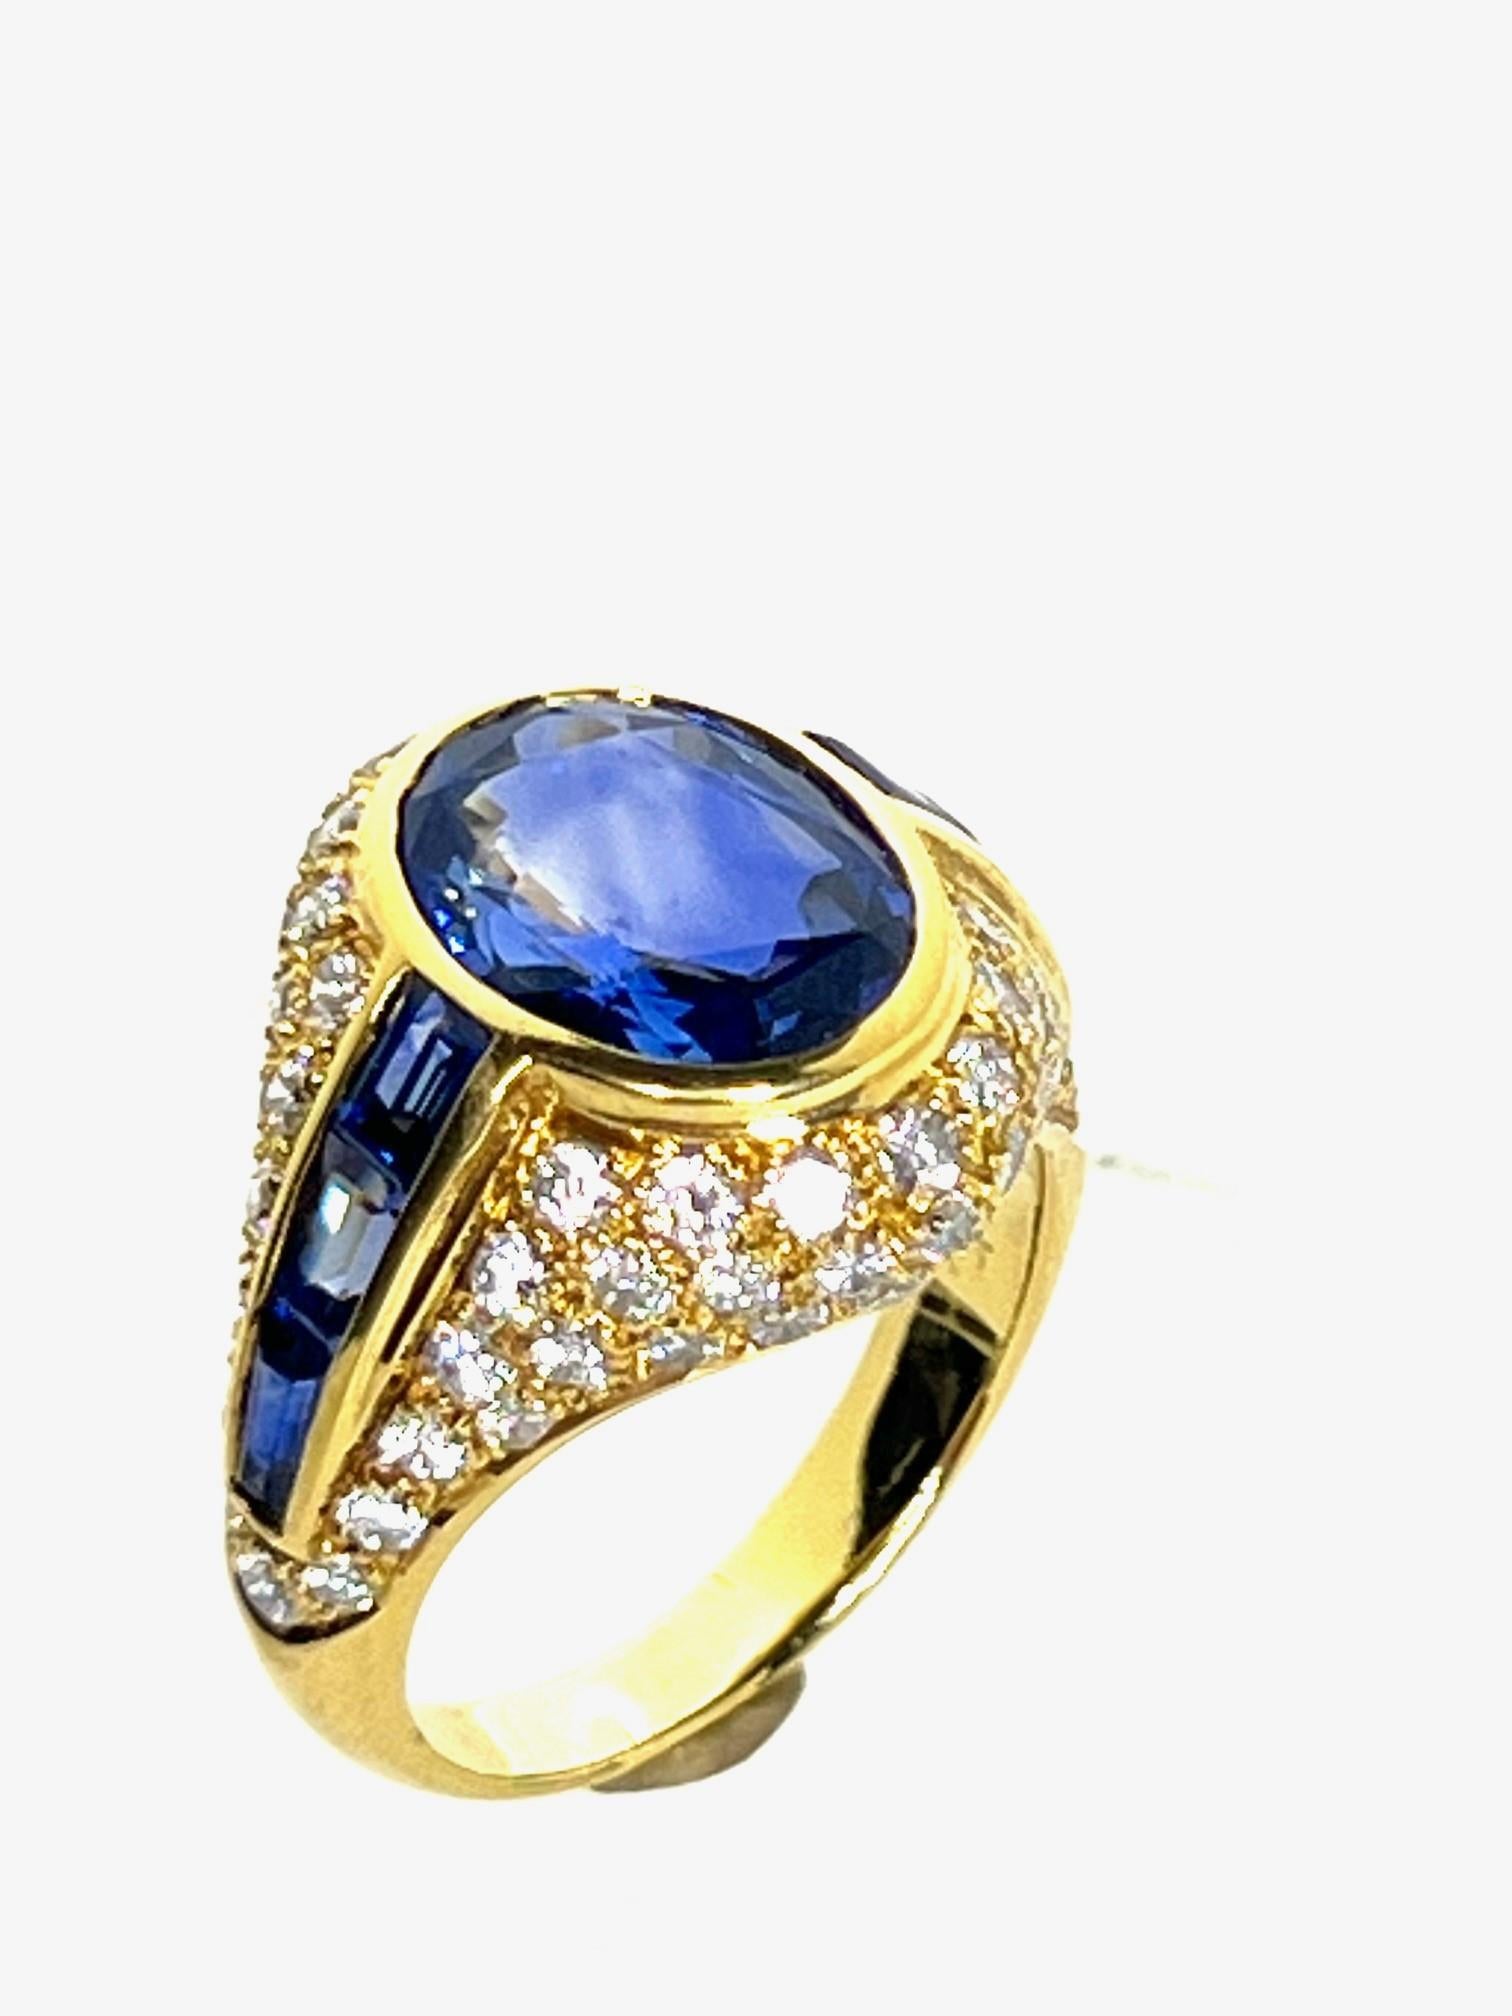 18k Yellow Gold (7.90g) Ring, set with:

1x Sapphire (Ceylon, Royal-Blue, No heat, 4.89ct)

6x Sapphire (fac., trapeze-cut, 1.11ct)

70x Diamonds (brilliant-cut, TW/vsi, 1.2-1.3mm, 1.55ct)